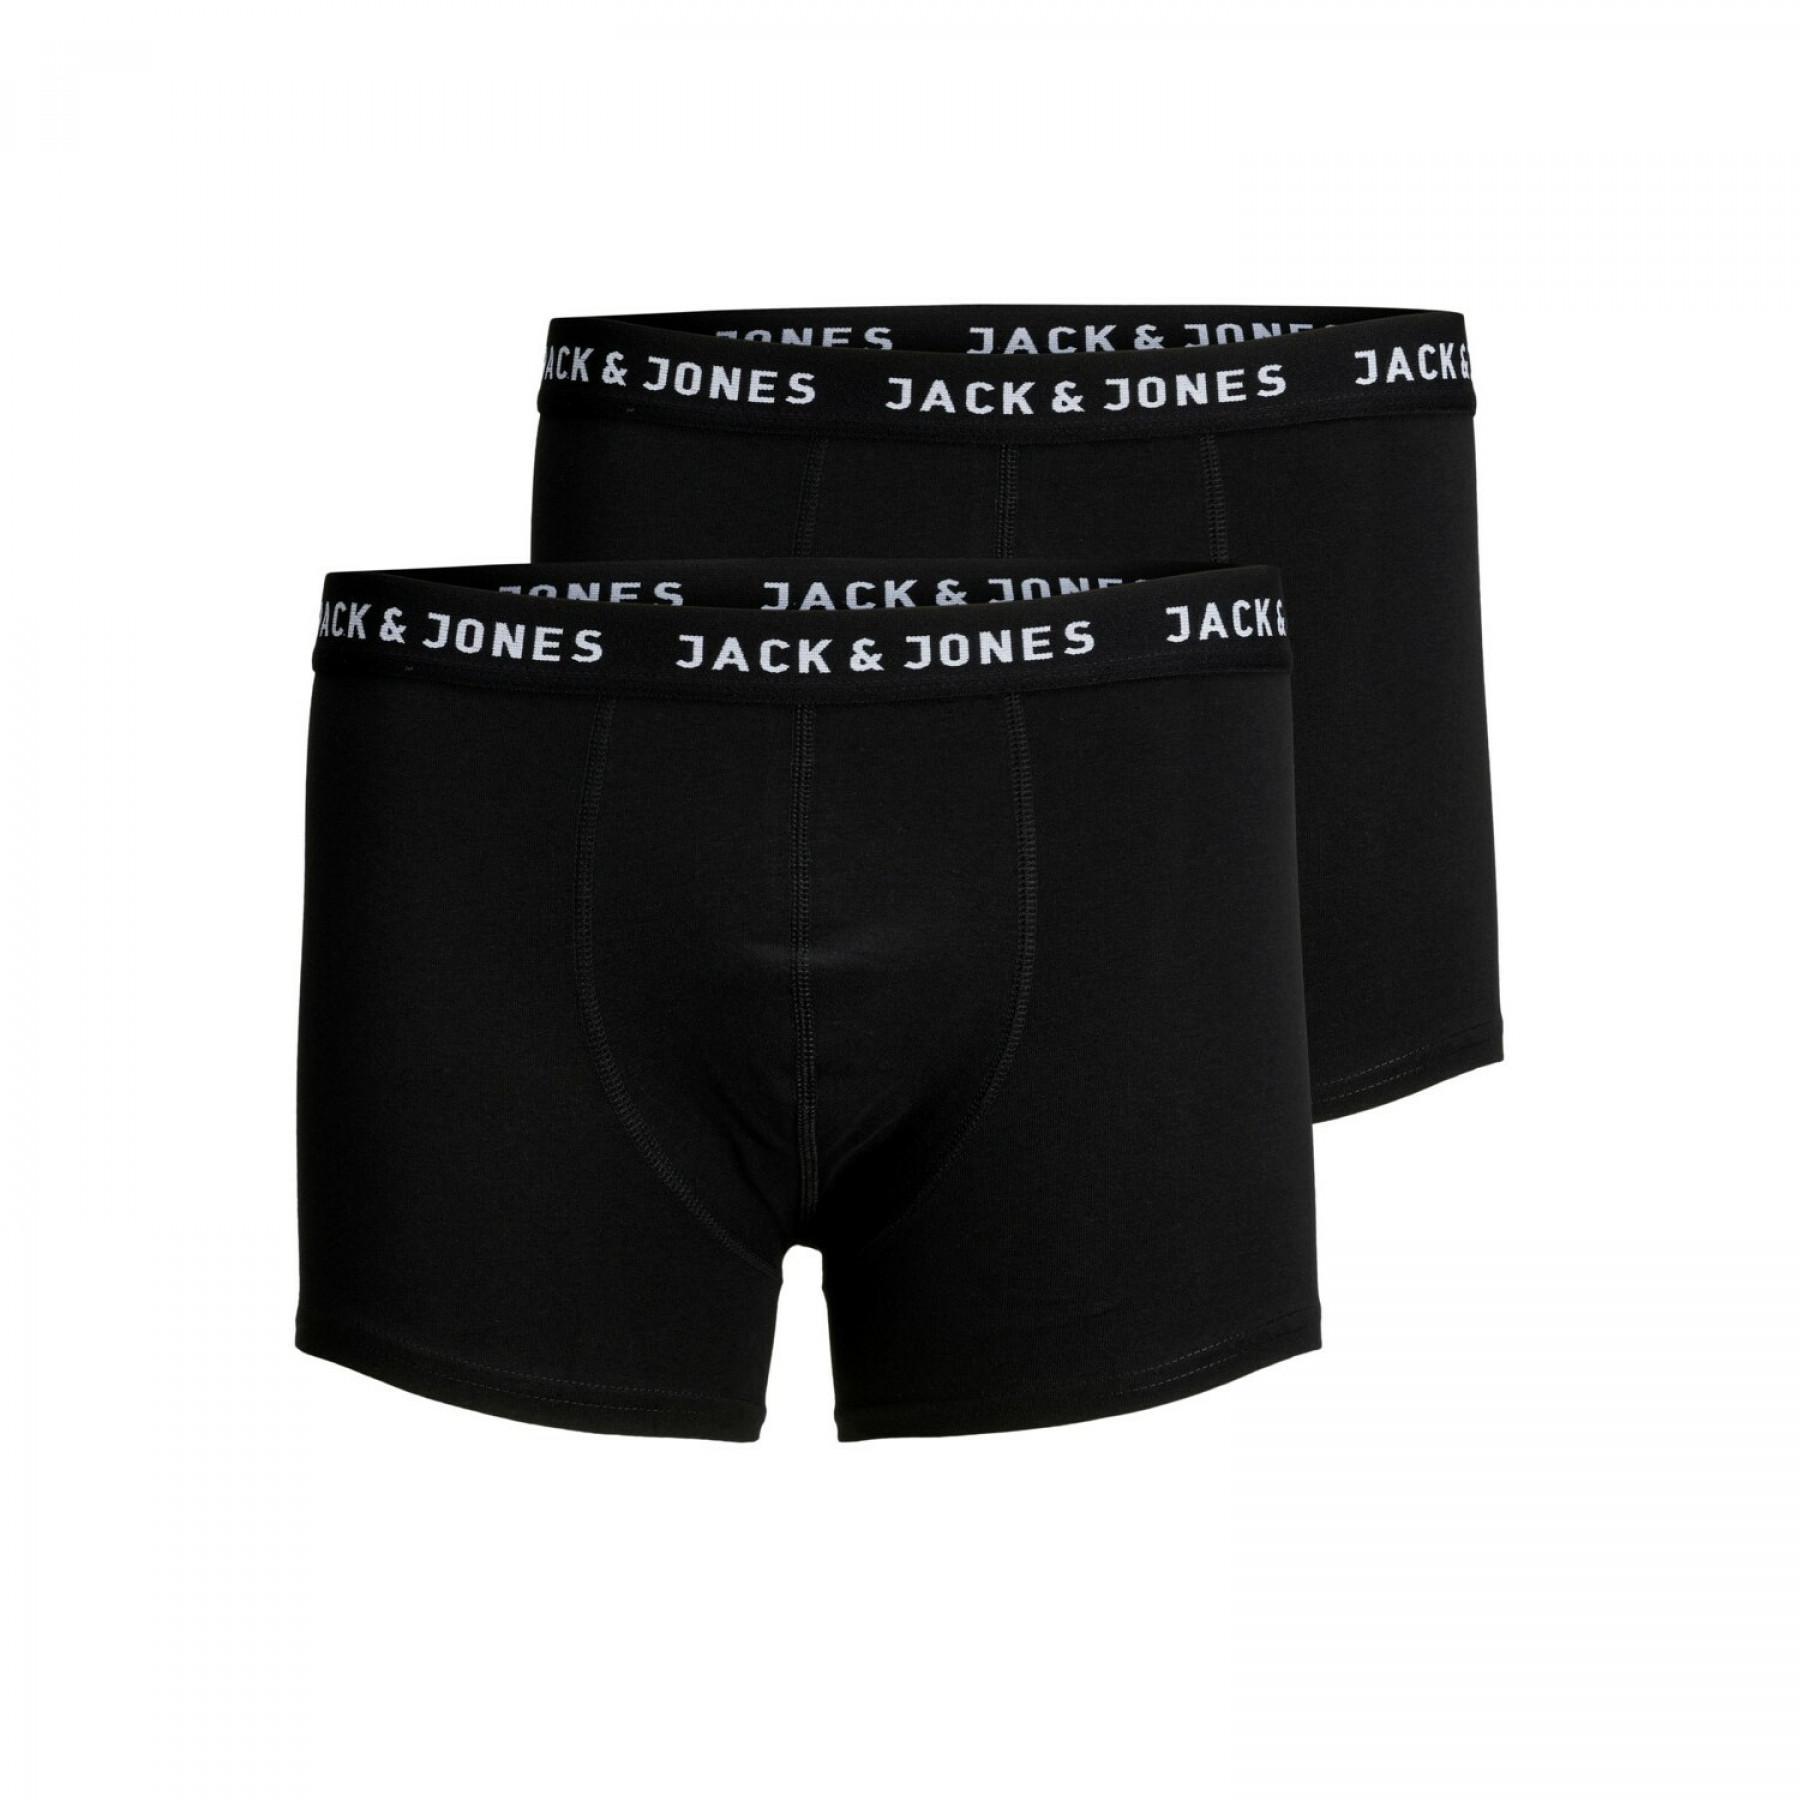 Set of 2 boxer shorts Jack & Jones Jacjon - Men's underwear - Underwear ...